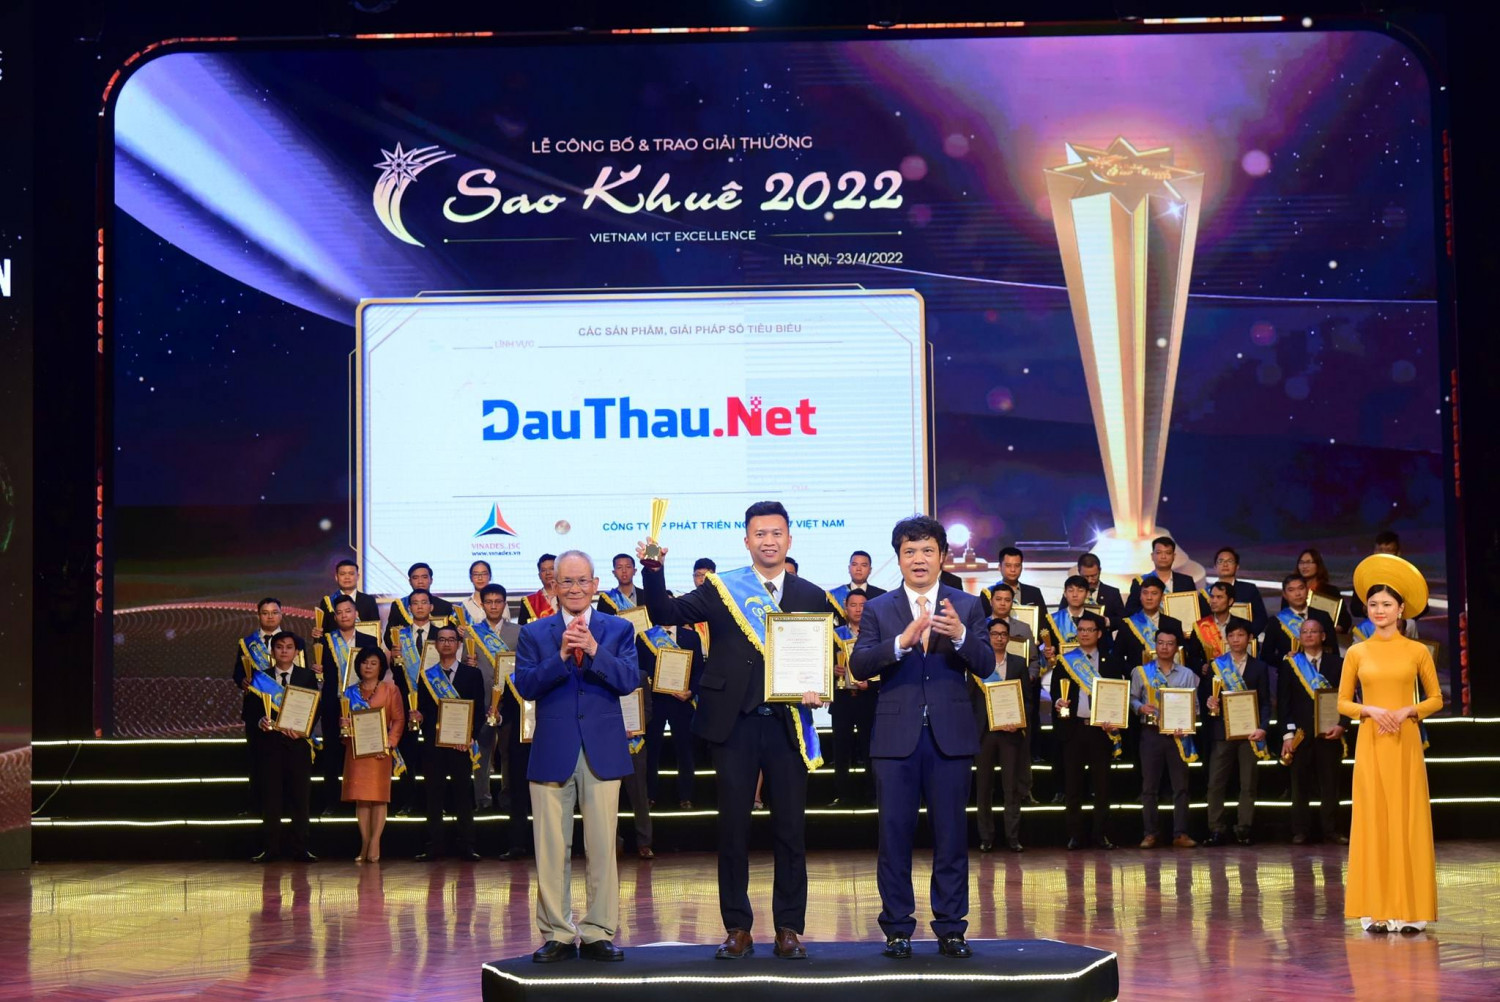 DauThau.Net received Sao Khue award in 2022